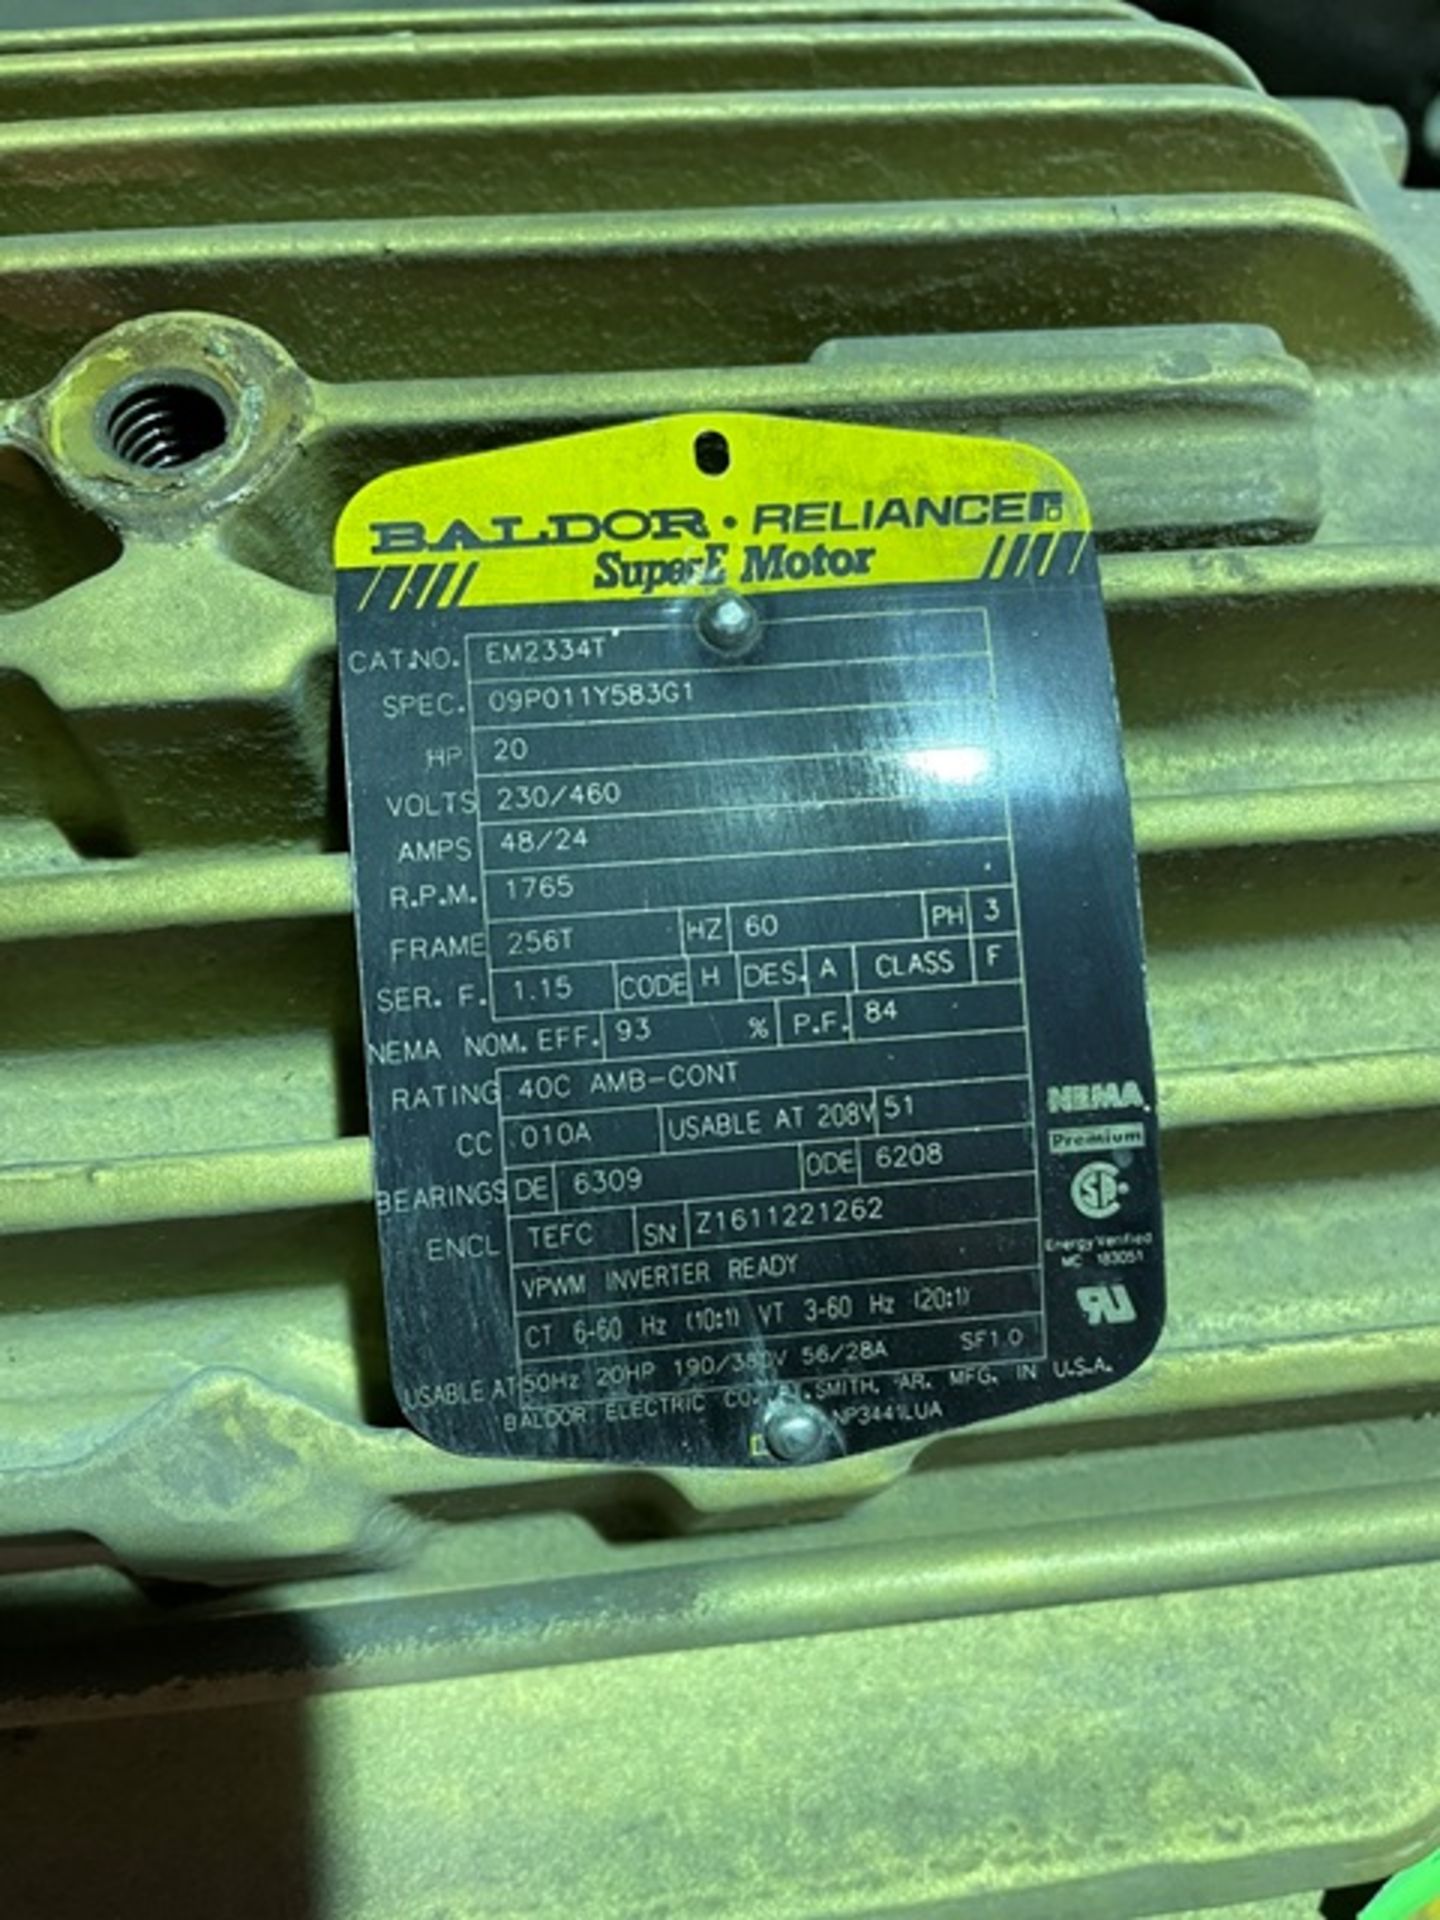 Baldor Reliance 20 HP Motor, 1765 RPM/256T Frame, Rigging & Loading Fee: $75 - Image 2 of 2